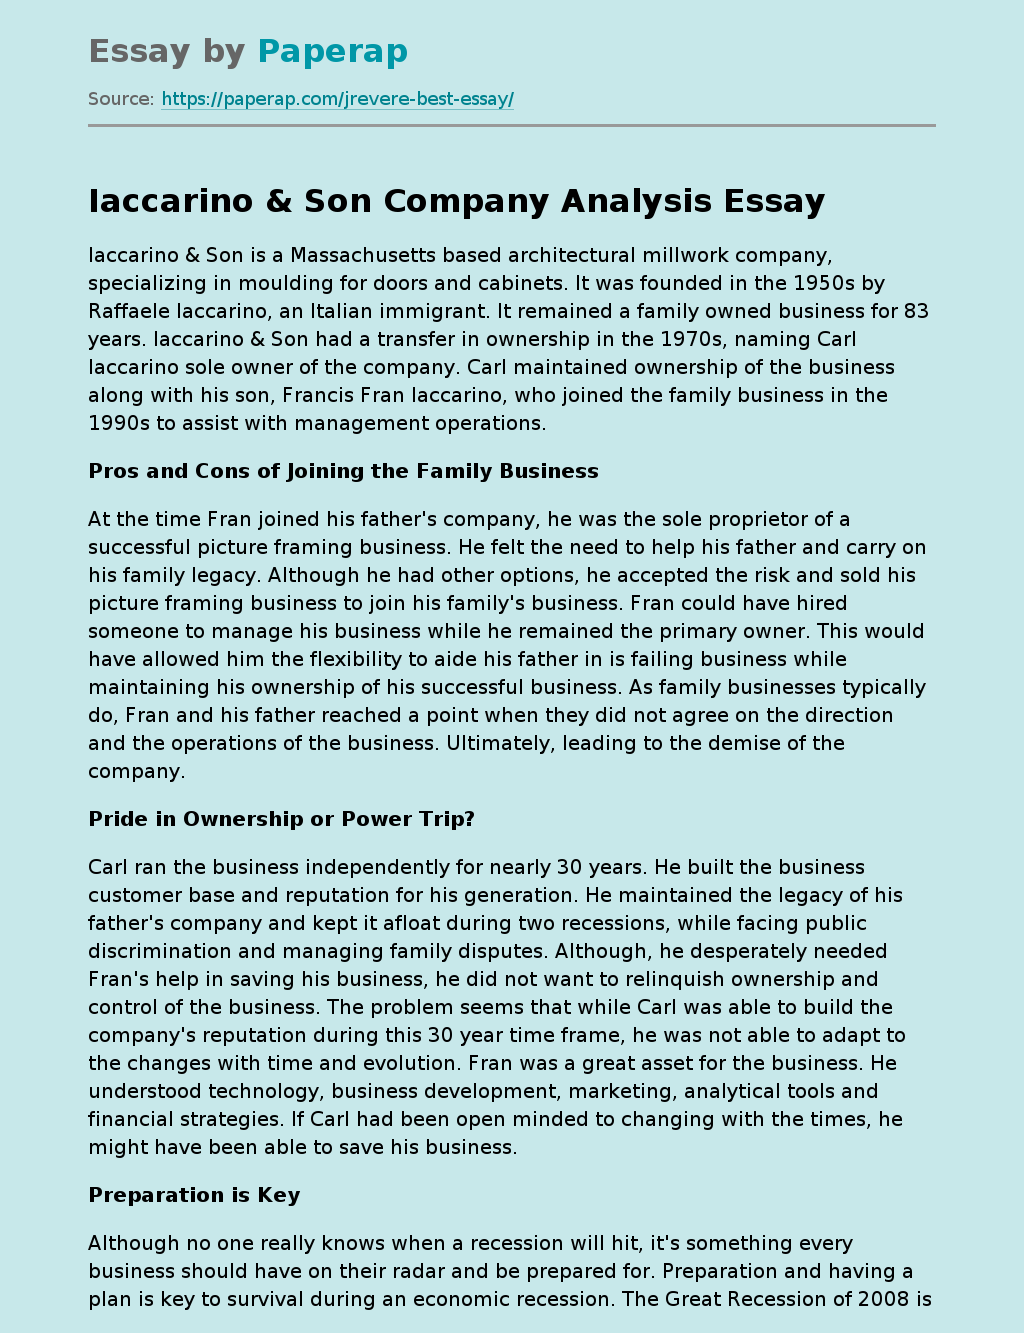 Iaccarino & Son Company Analysis